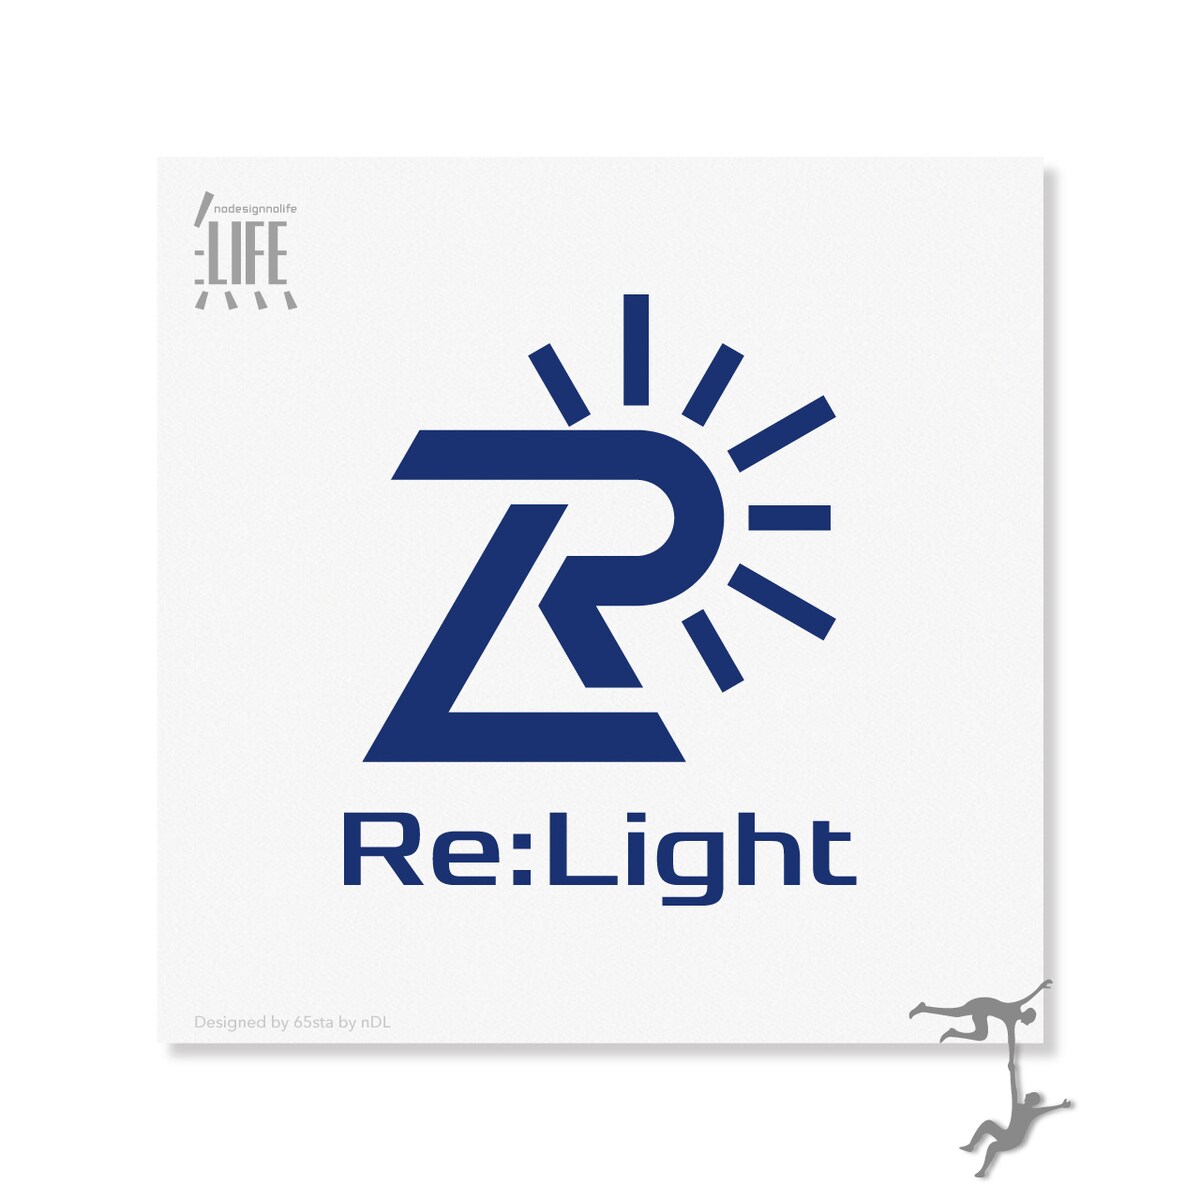 Re:Light